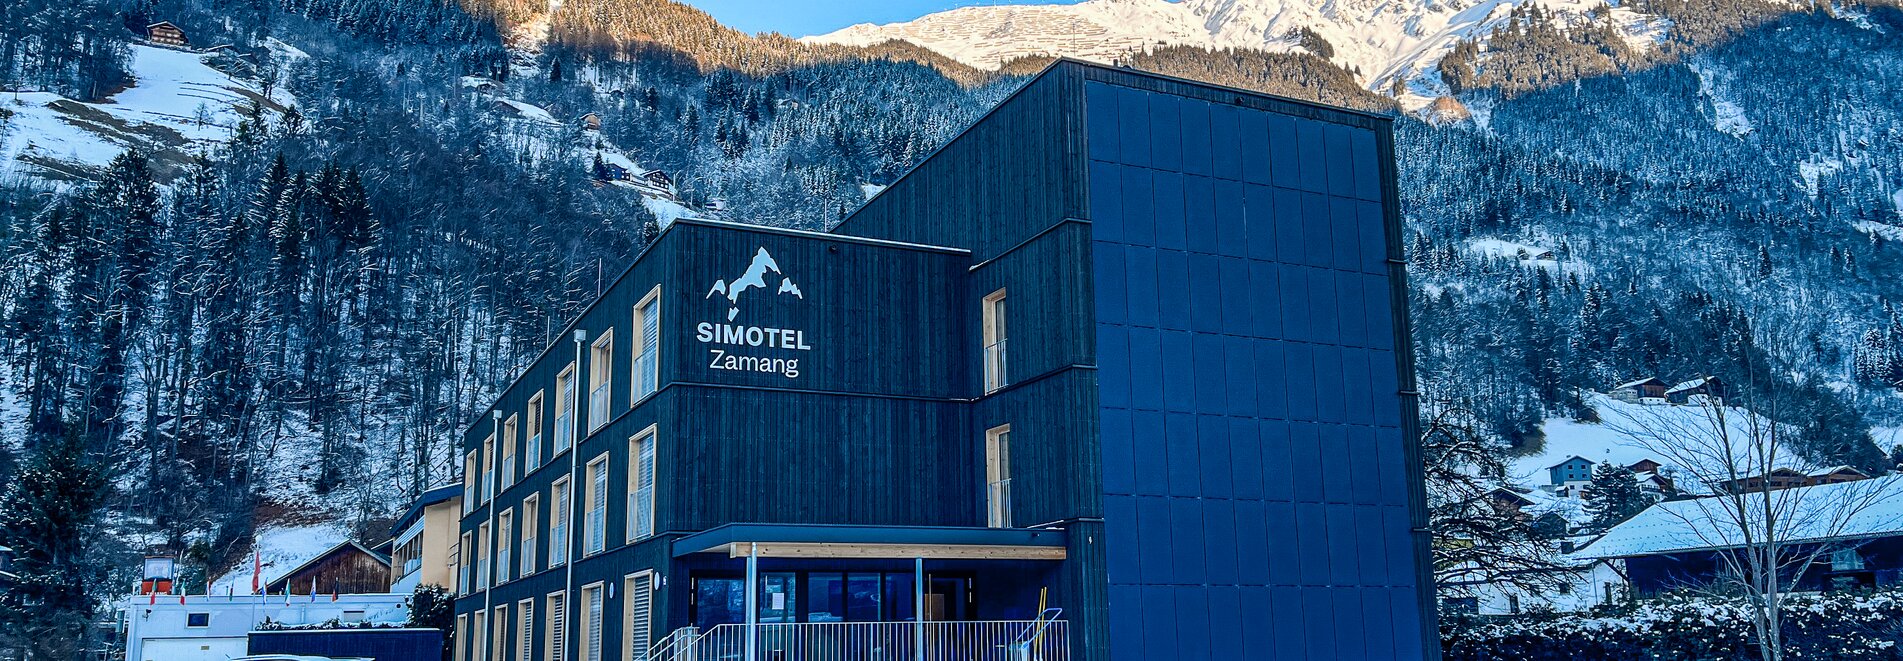 Das SiMotel im Winter in der Silvretta Montafon  | © Silvretta Montafon 